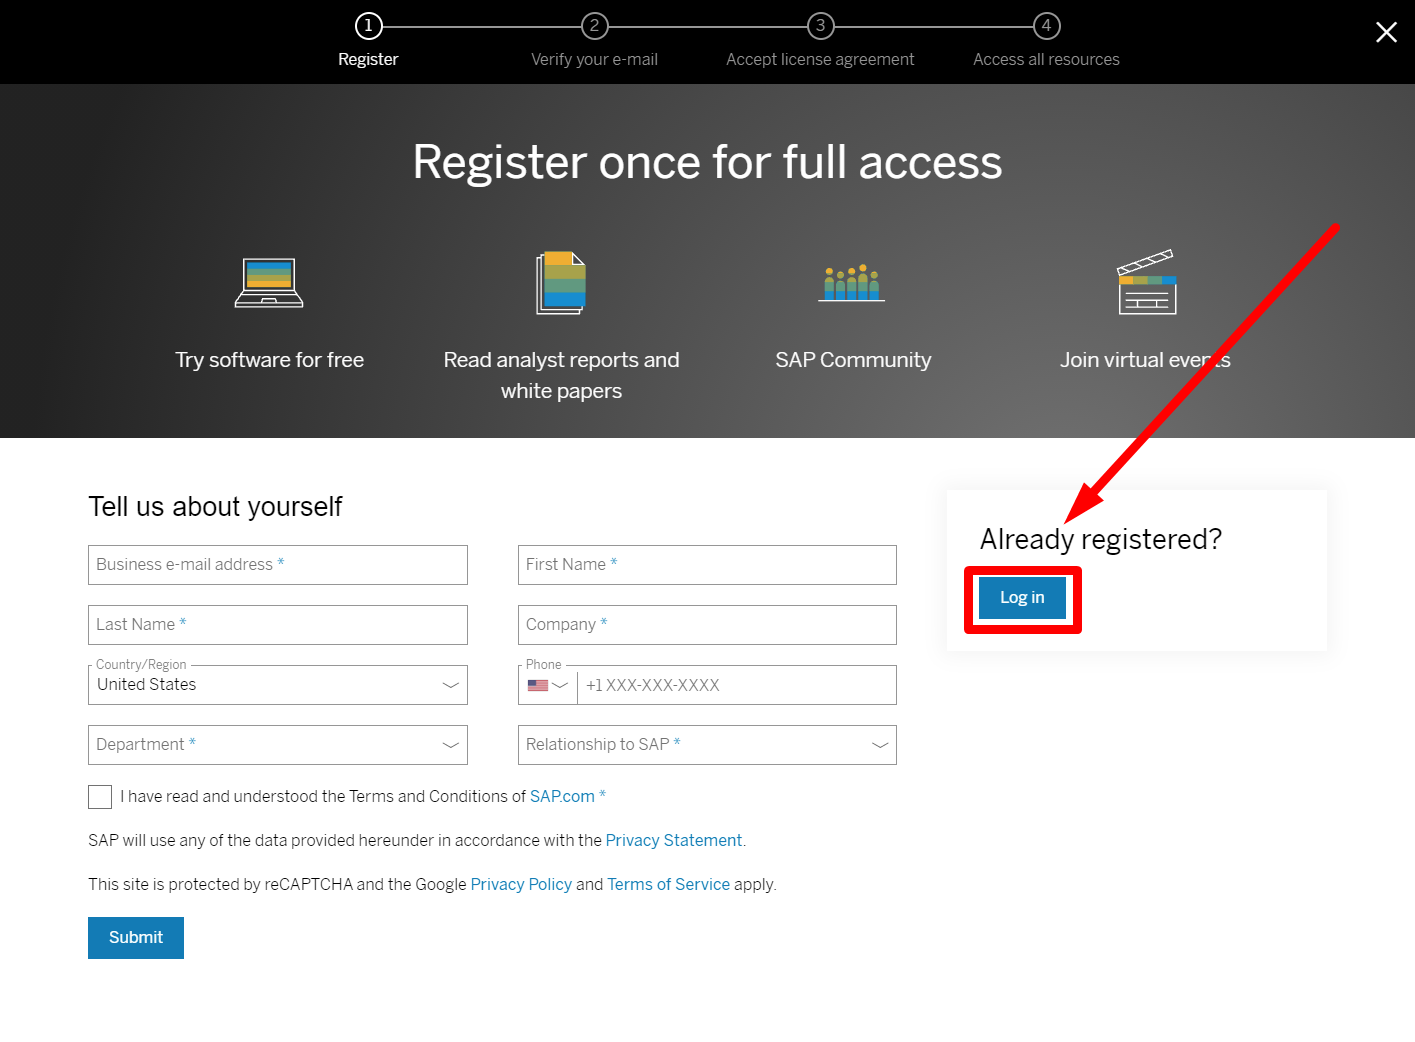  Download SAP Software: Log In or Register to Start the Download